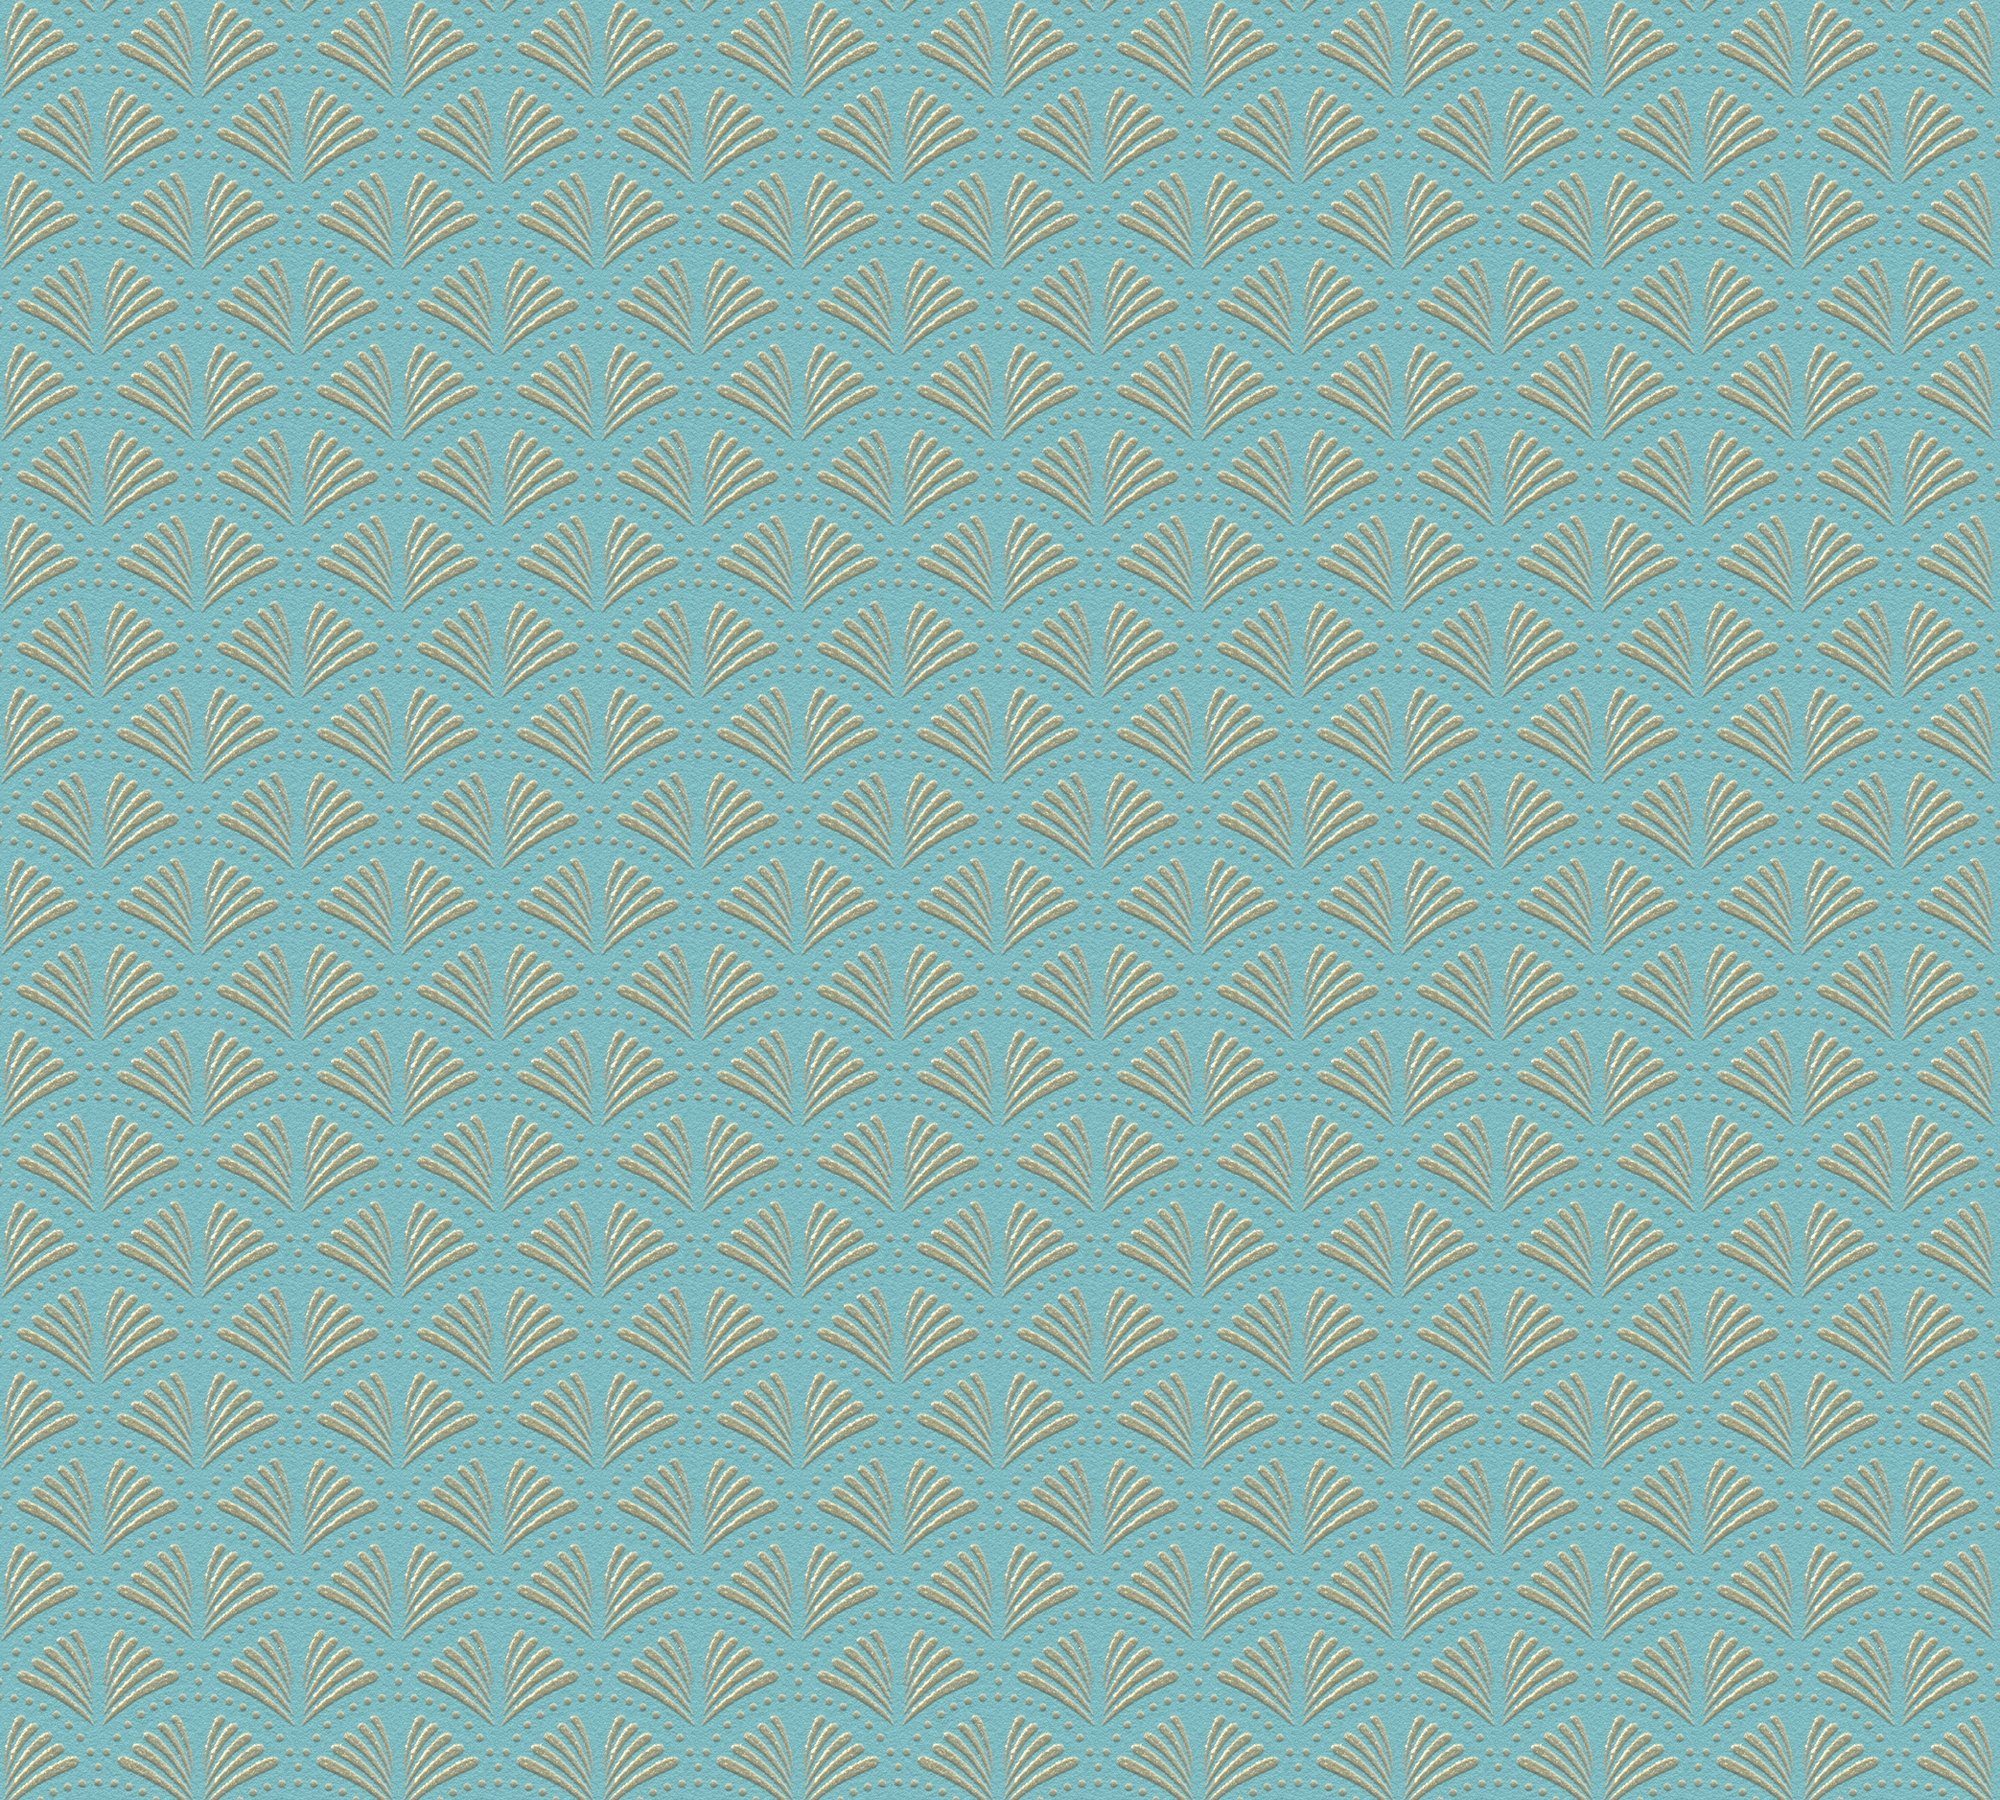 blau/grün/metallic A.S. Vliestapete Création Trendwall, Deco Tapete Art gemustert, Glitzertapete